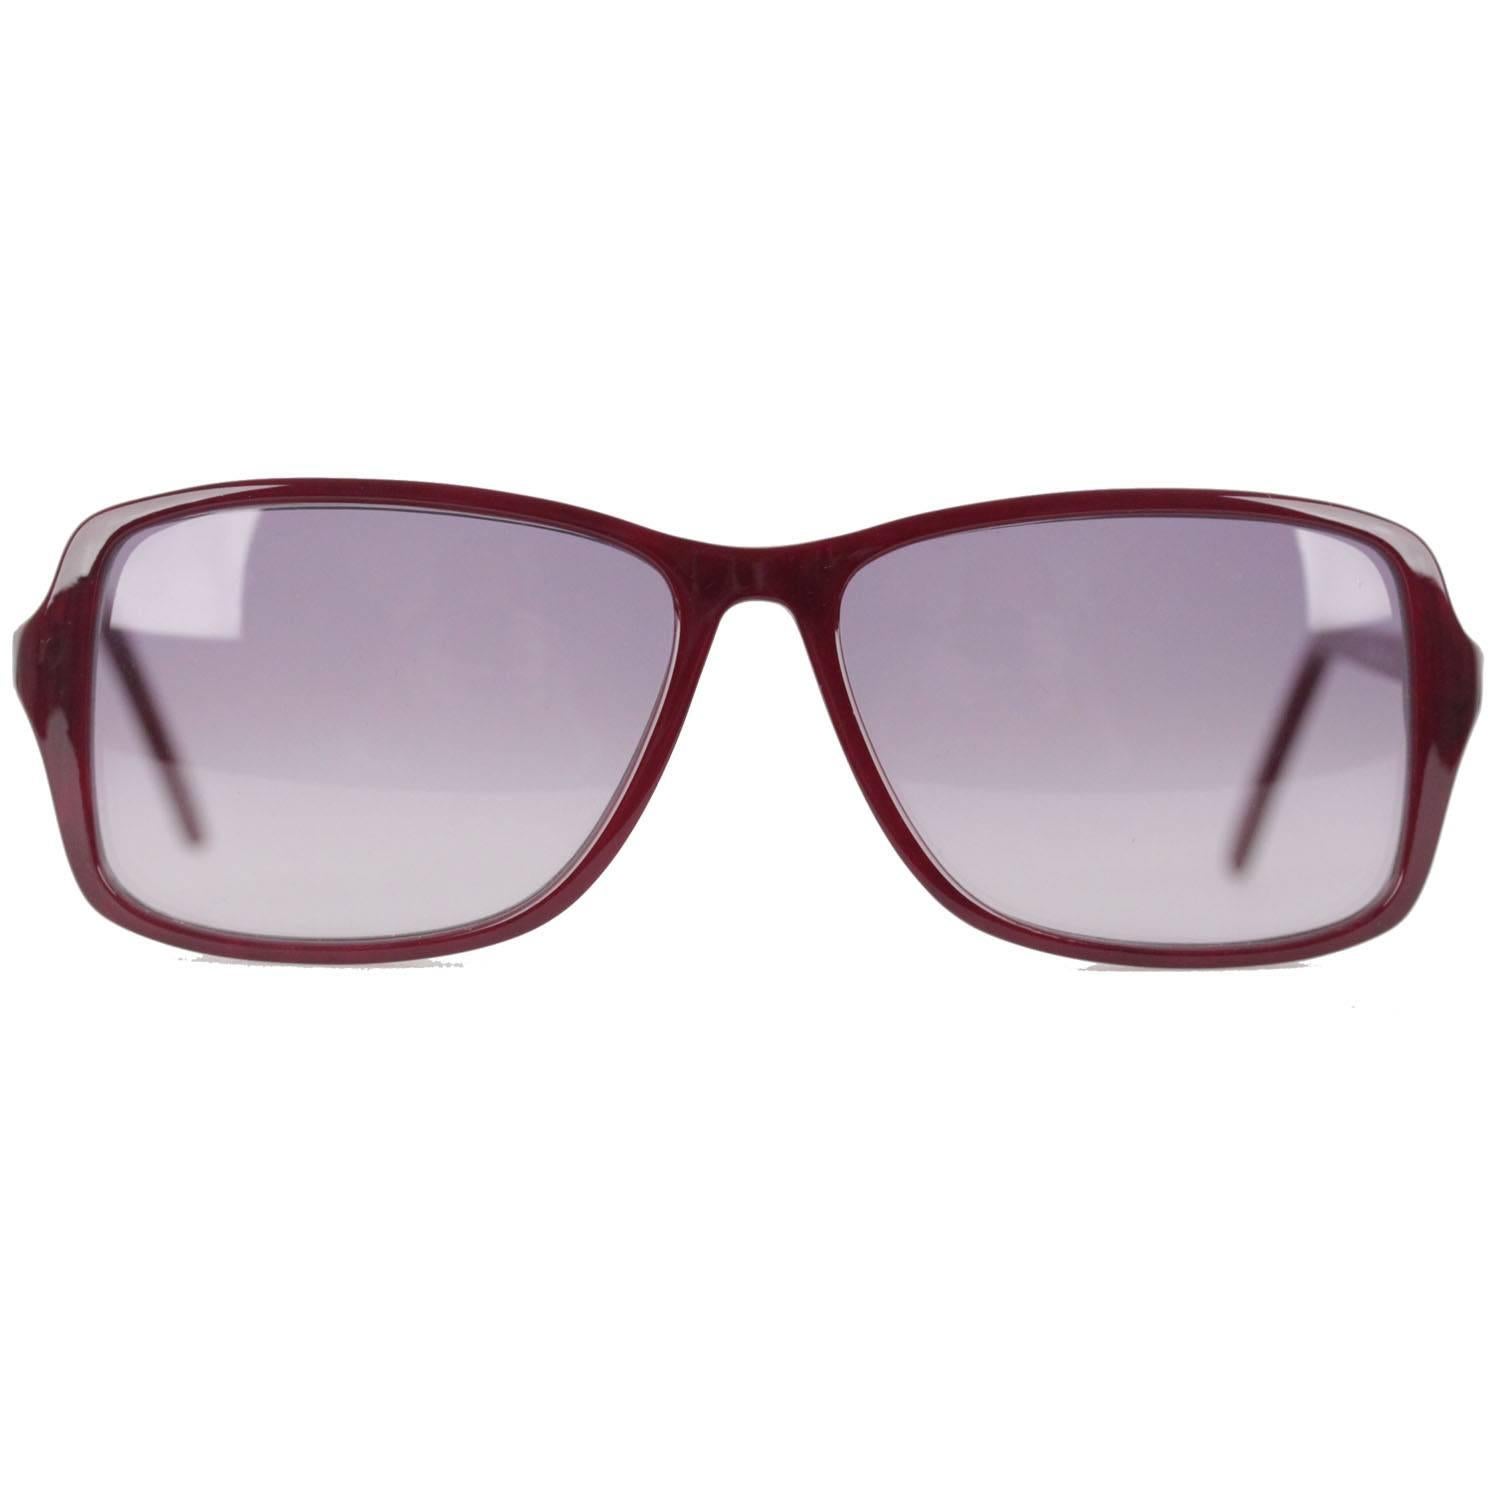 YVES SAINT LAURENT Rare MINT Burgundy Unisex Sunglasses mod. ICARE 59mm